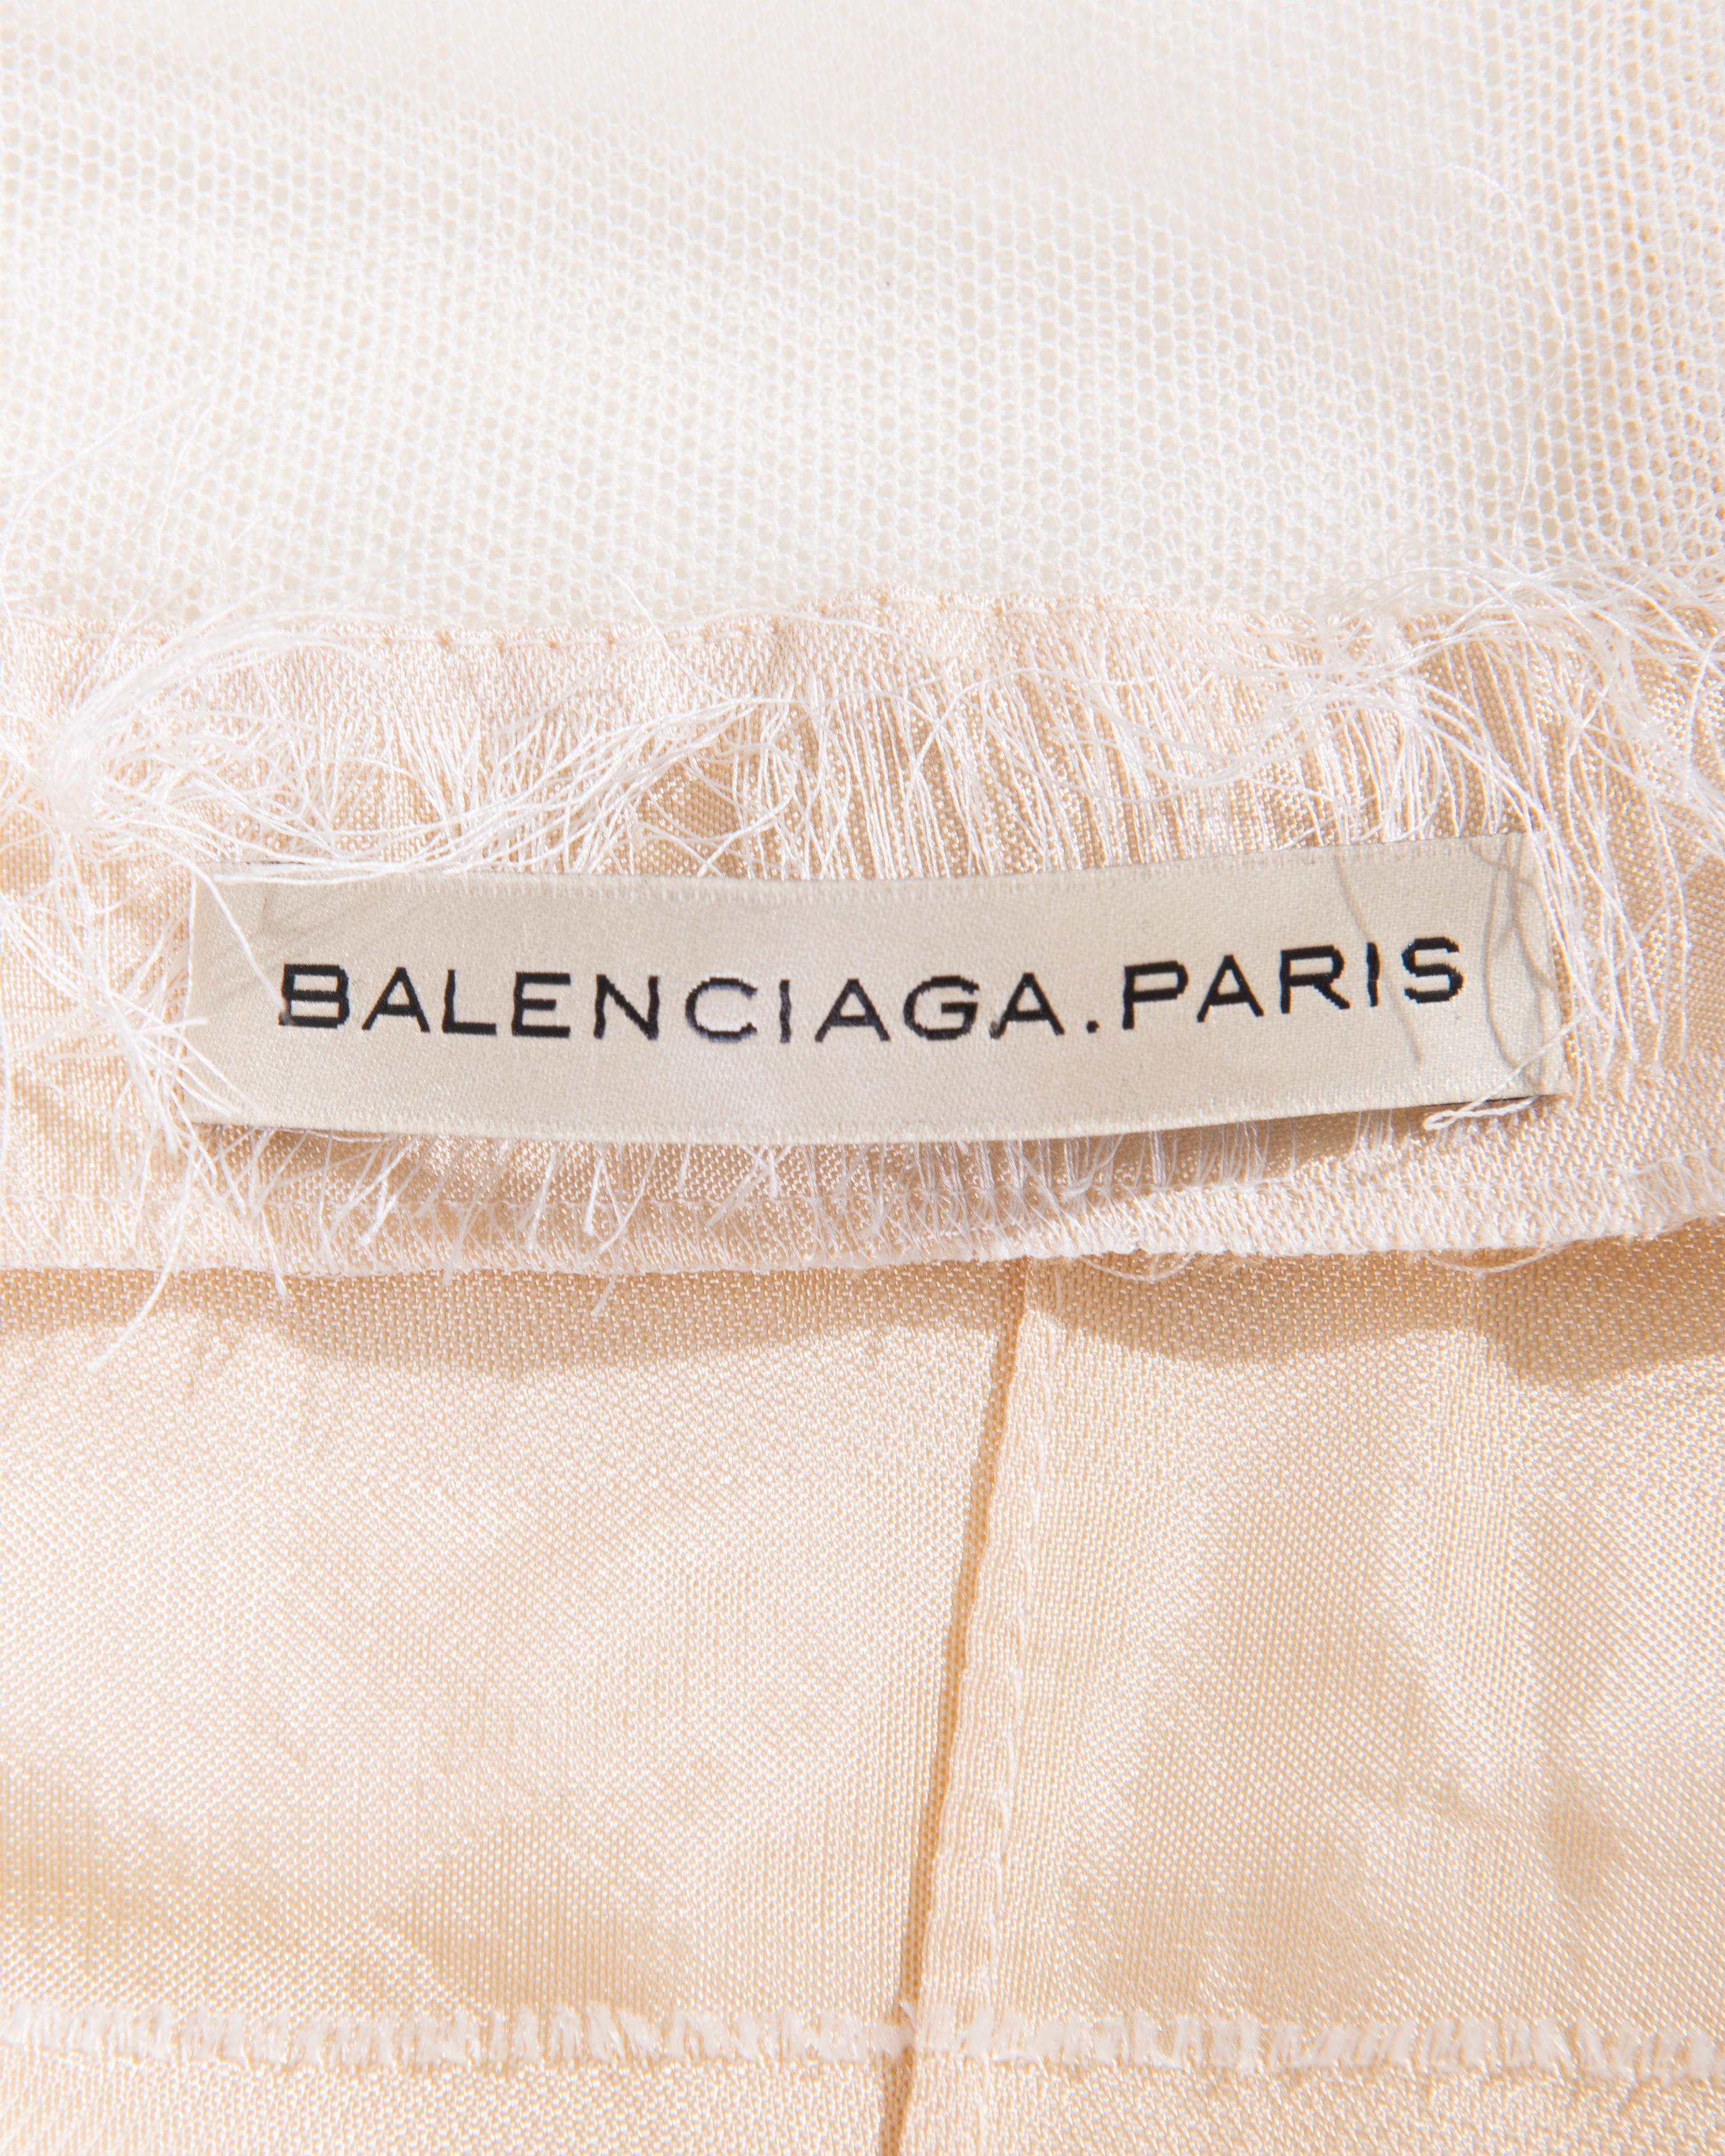 S/S 2006 Balenciaga by Nicolas Ghesquiere  Ecru Mesh Fringe Dress For Sale 6